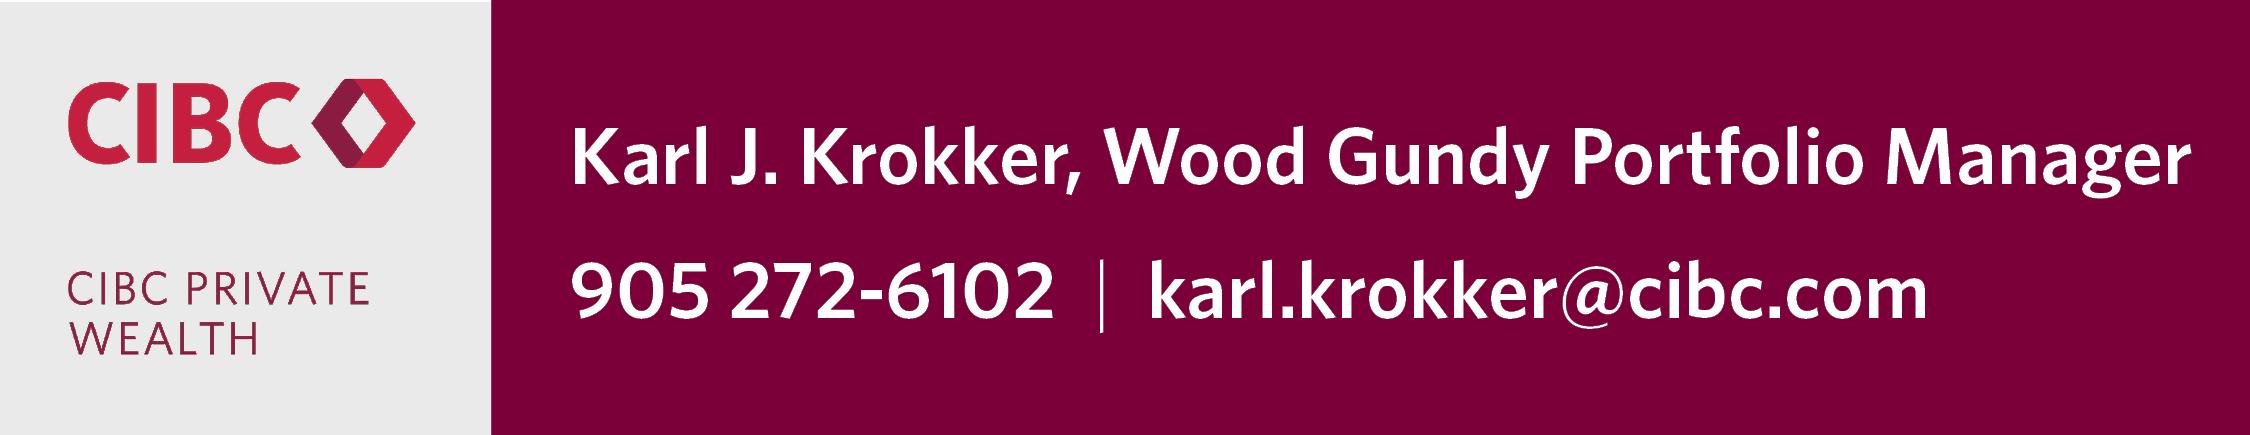 CIBC Karl Krokker, Wood Gundy